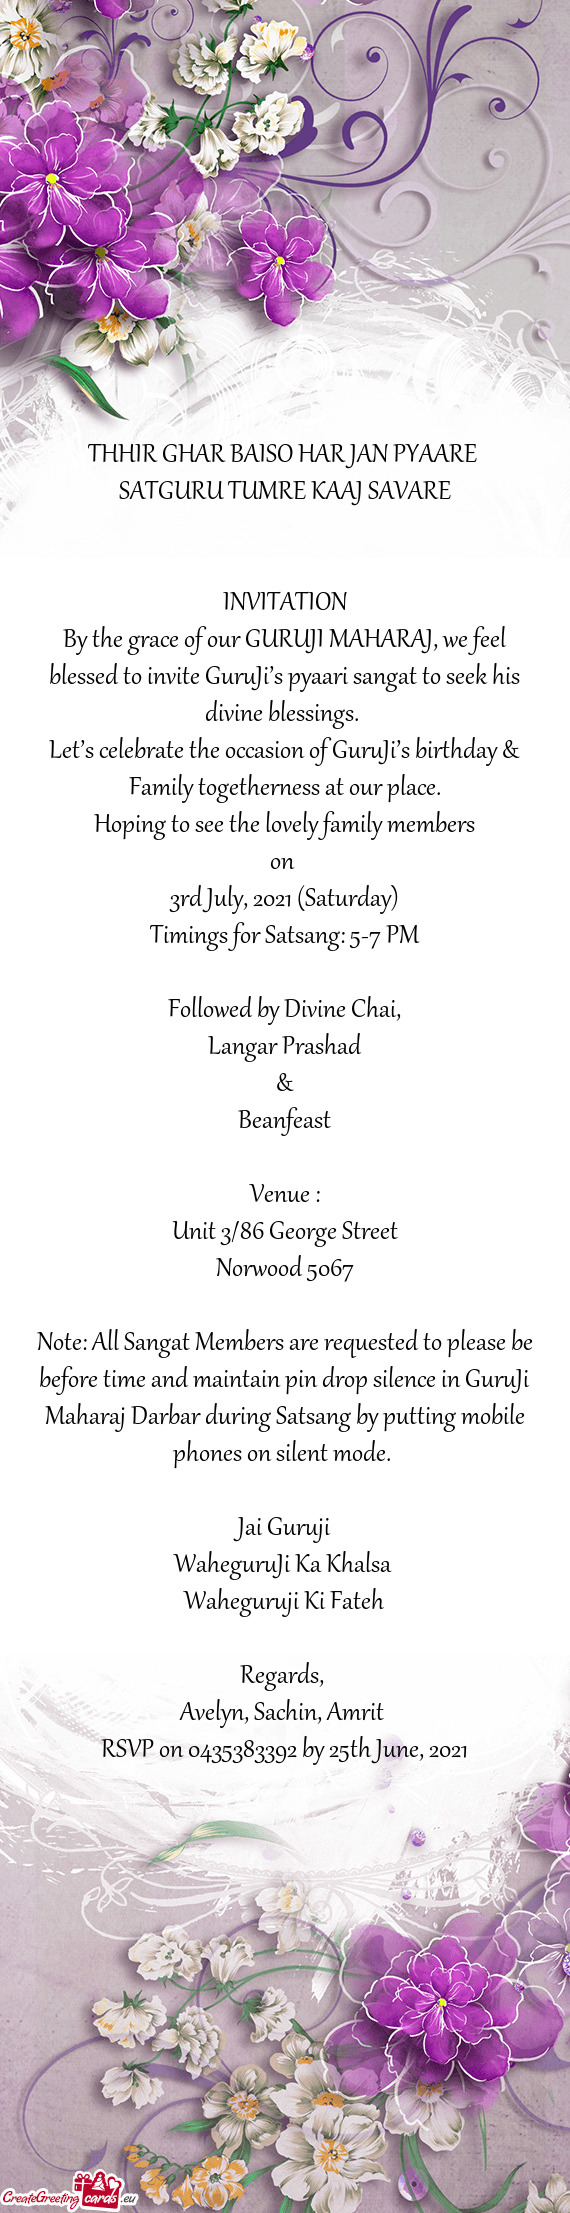 Timings for Satsang: 5-7 PM